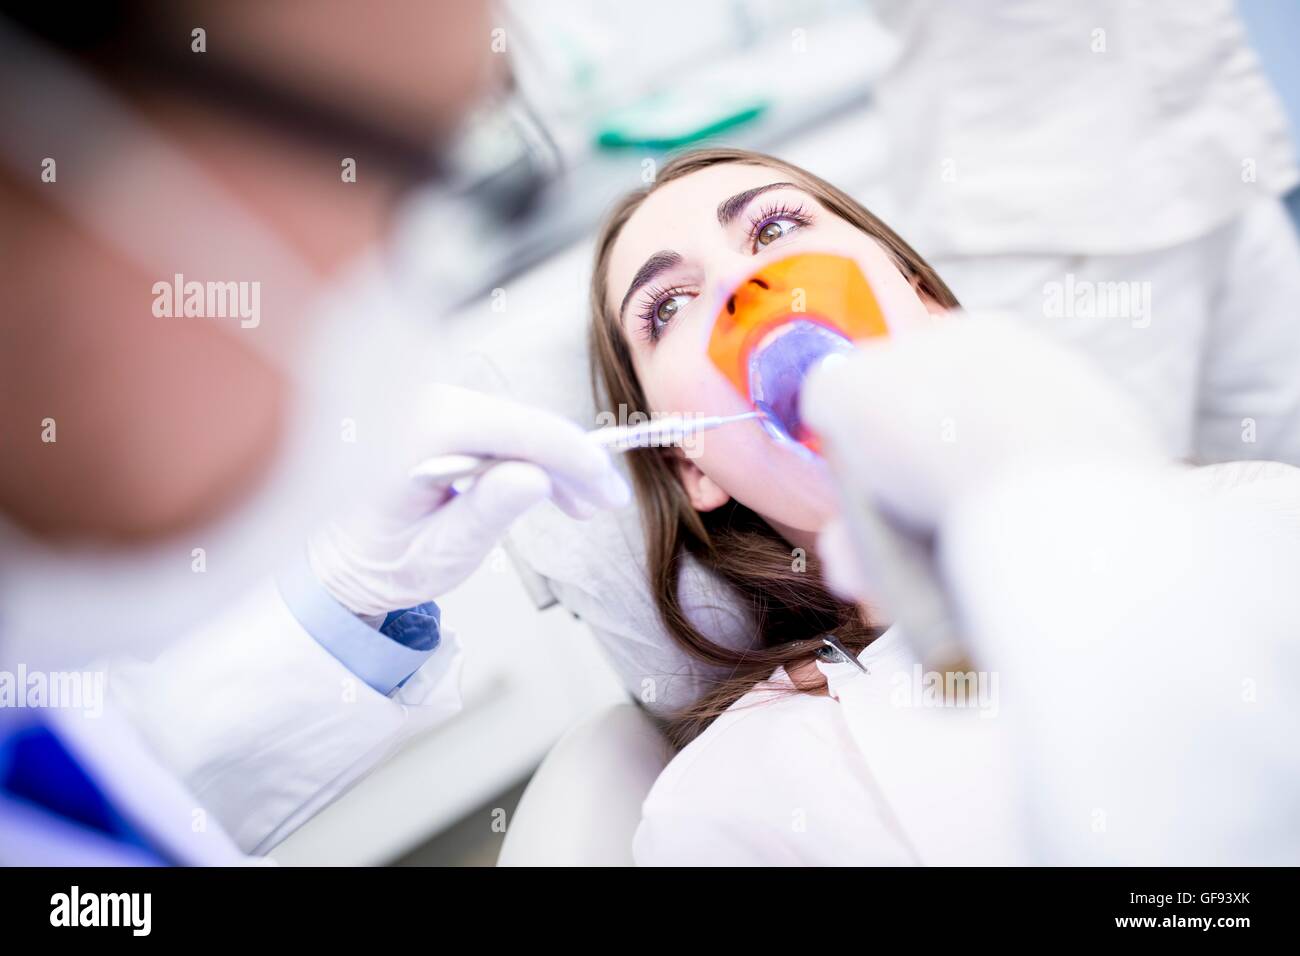 MODEL RELEASED. Patient receiving ultraviolet light procedure at dentist clinic. Stock Photo